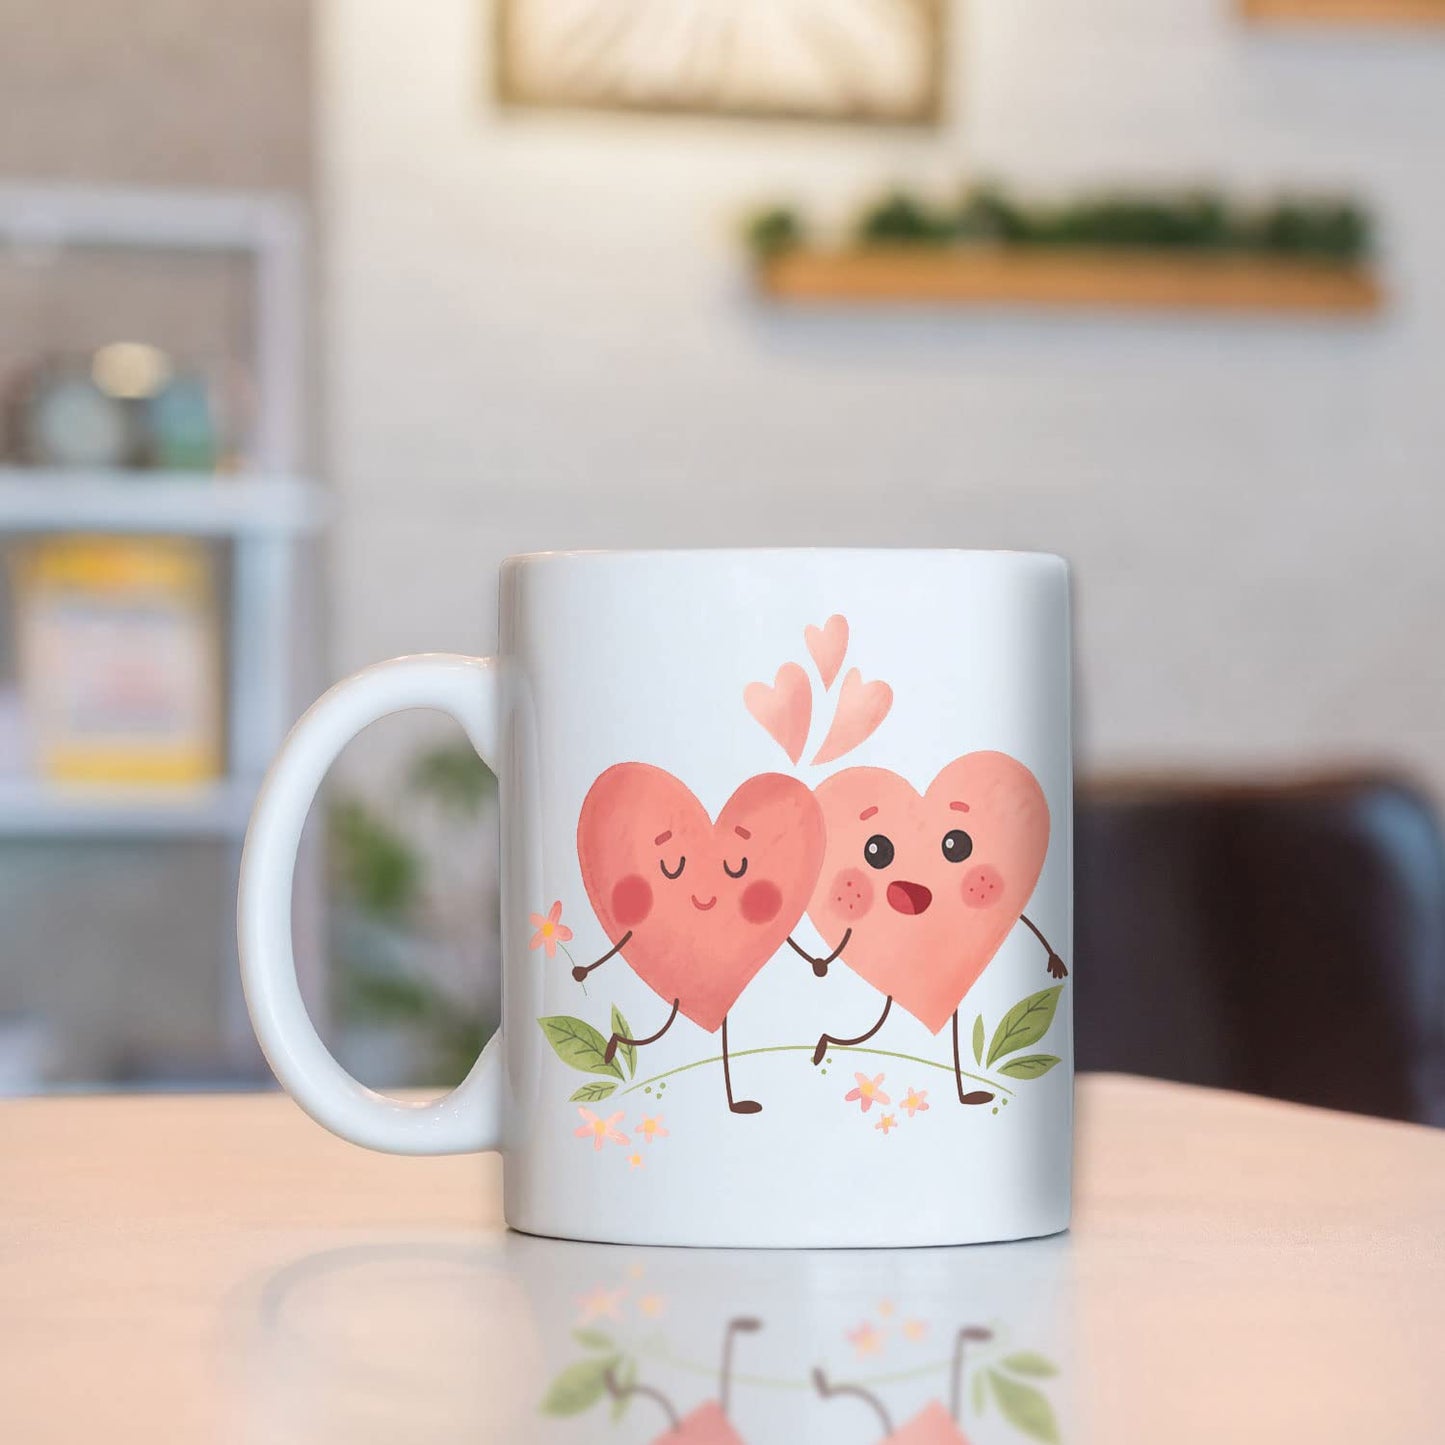 Valentine's Day Special Mug